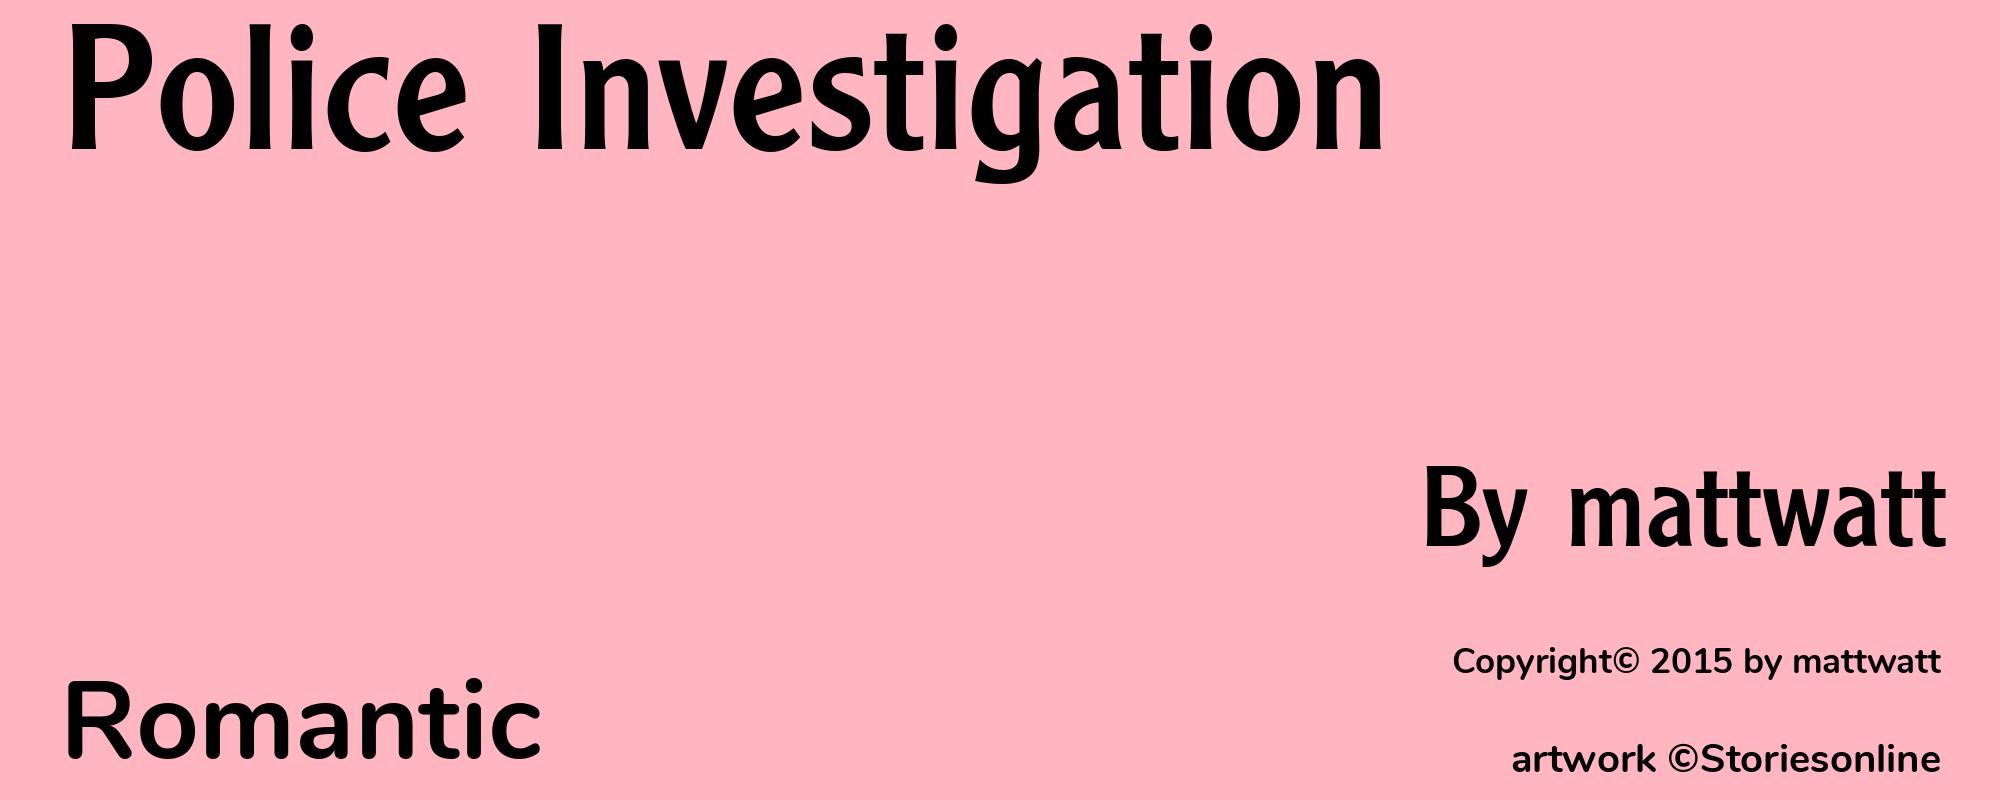 Police Investigation - Cover